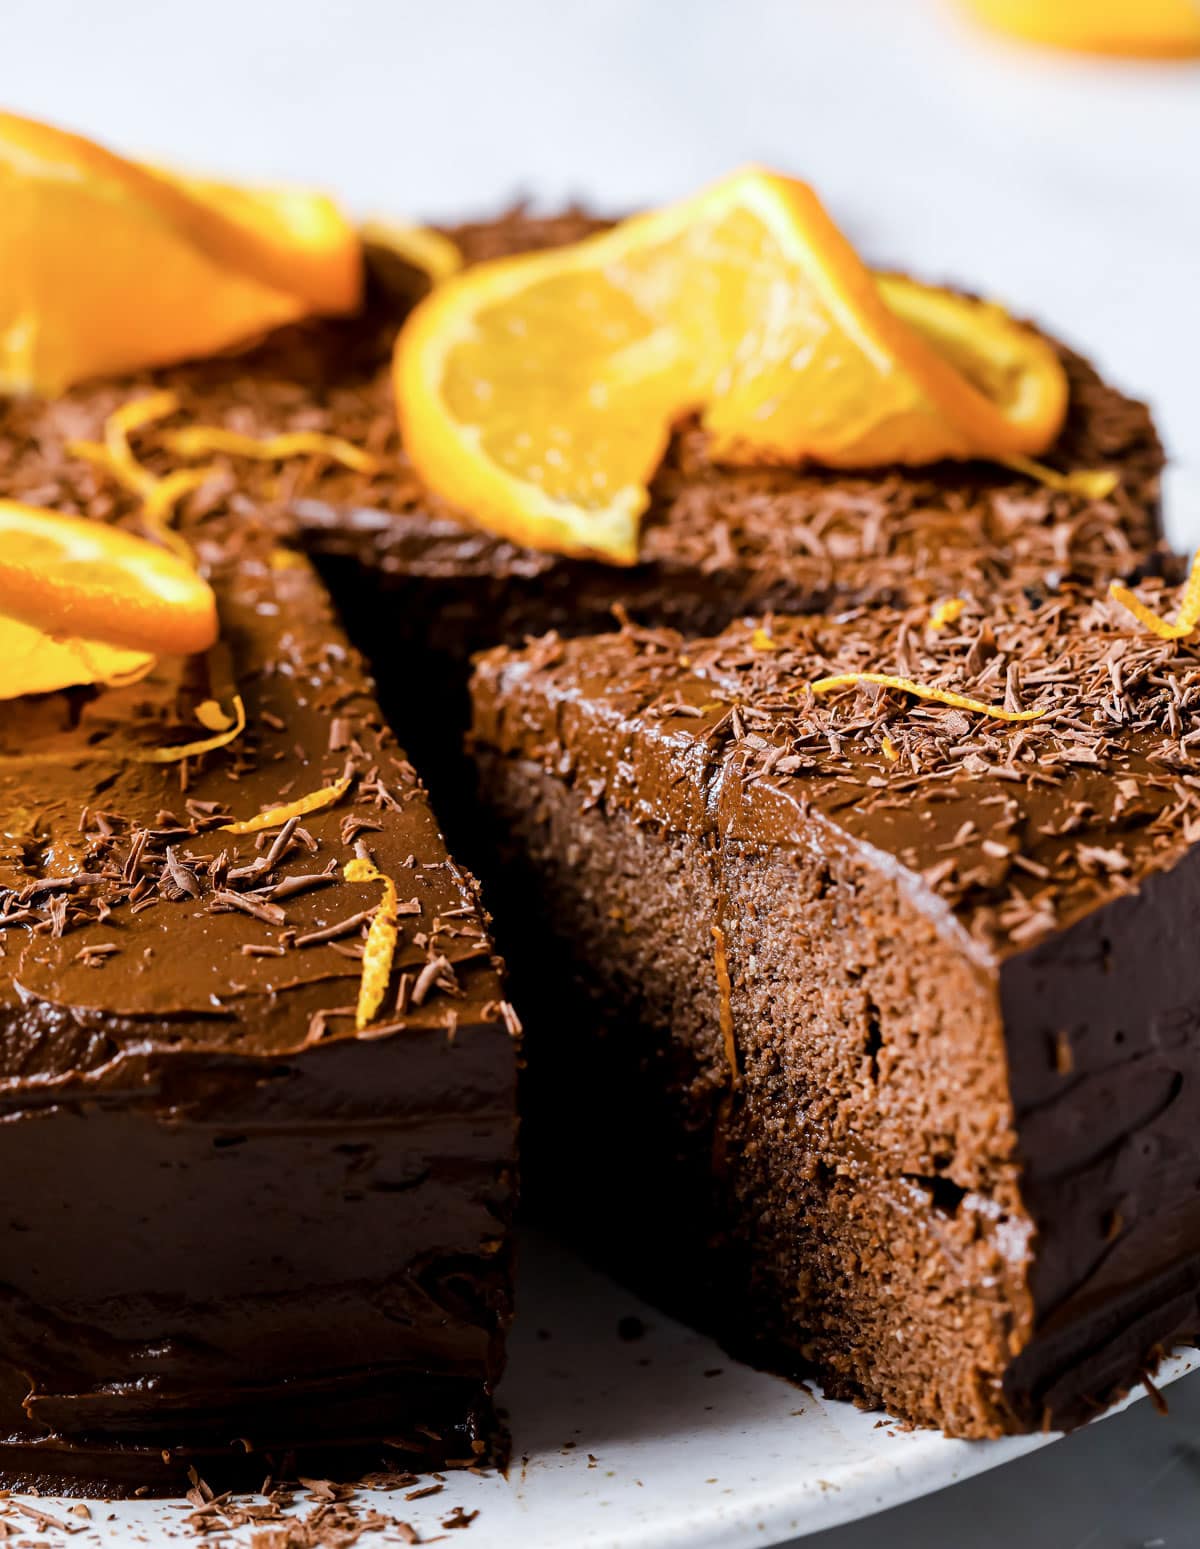 Almond flour chocolate cake with orange slices